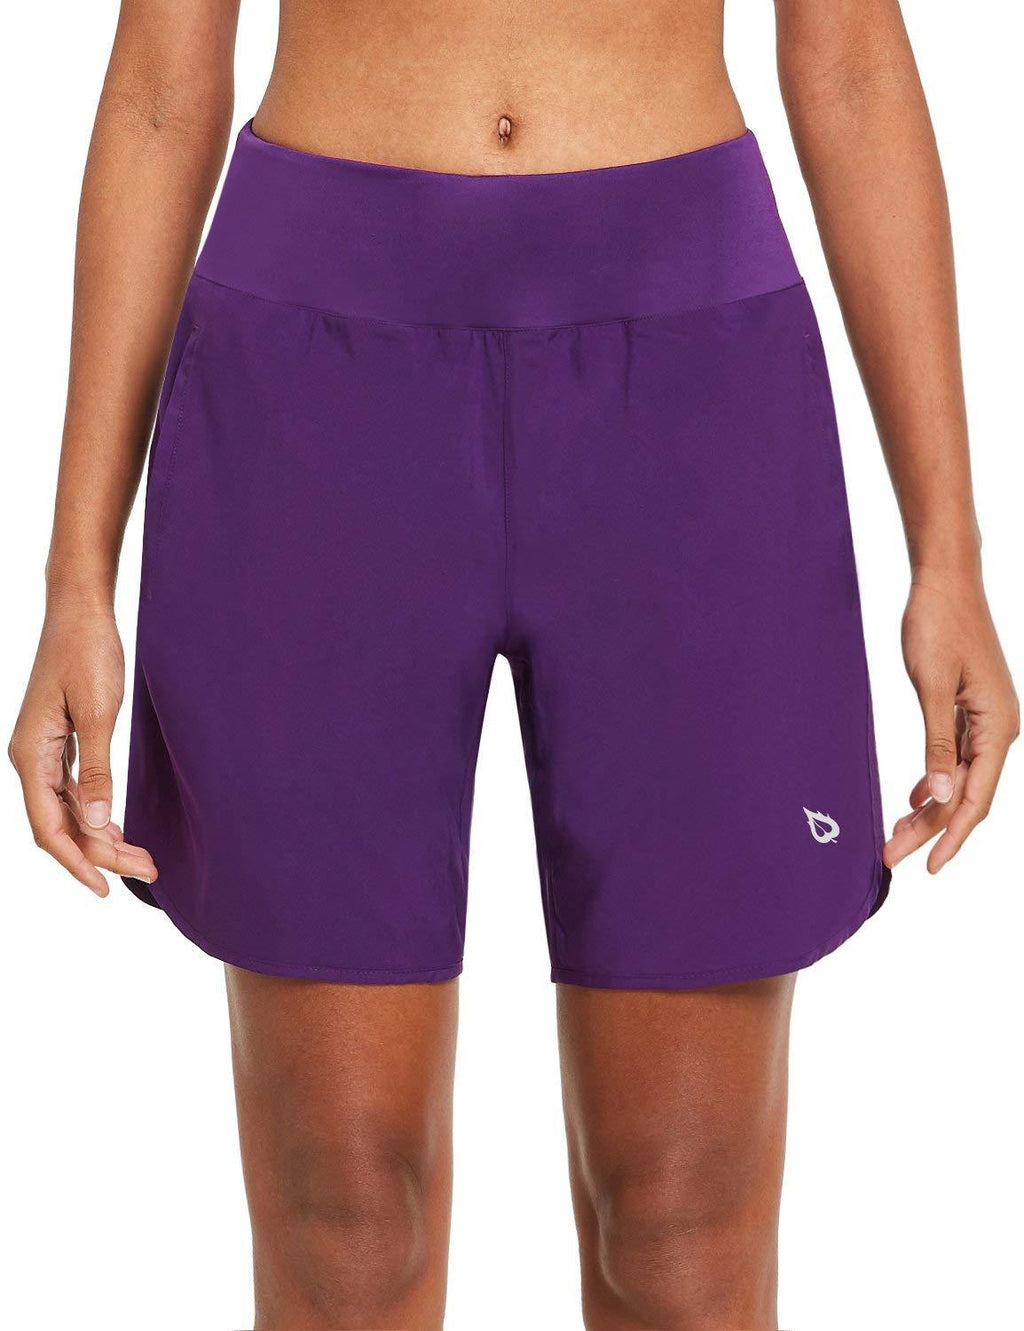 [AUSTRALIA] - BALEAF Women's 7 Inches Long Running Shorts with Liner Lounge Sport Gym Shorts Back Zipper Pocket Purple XX-Large 